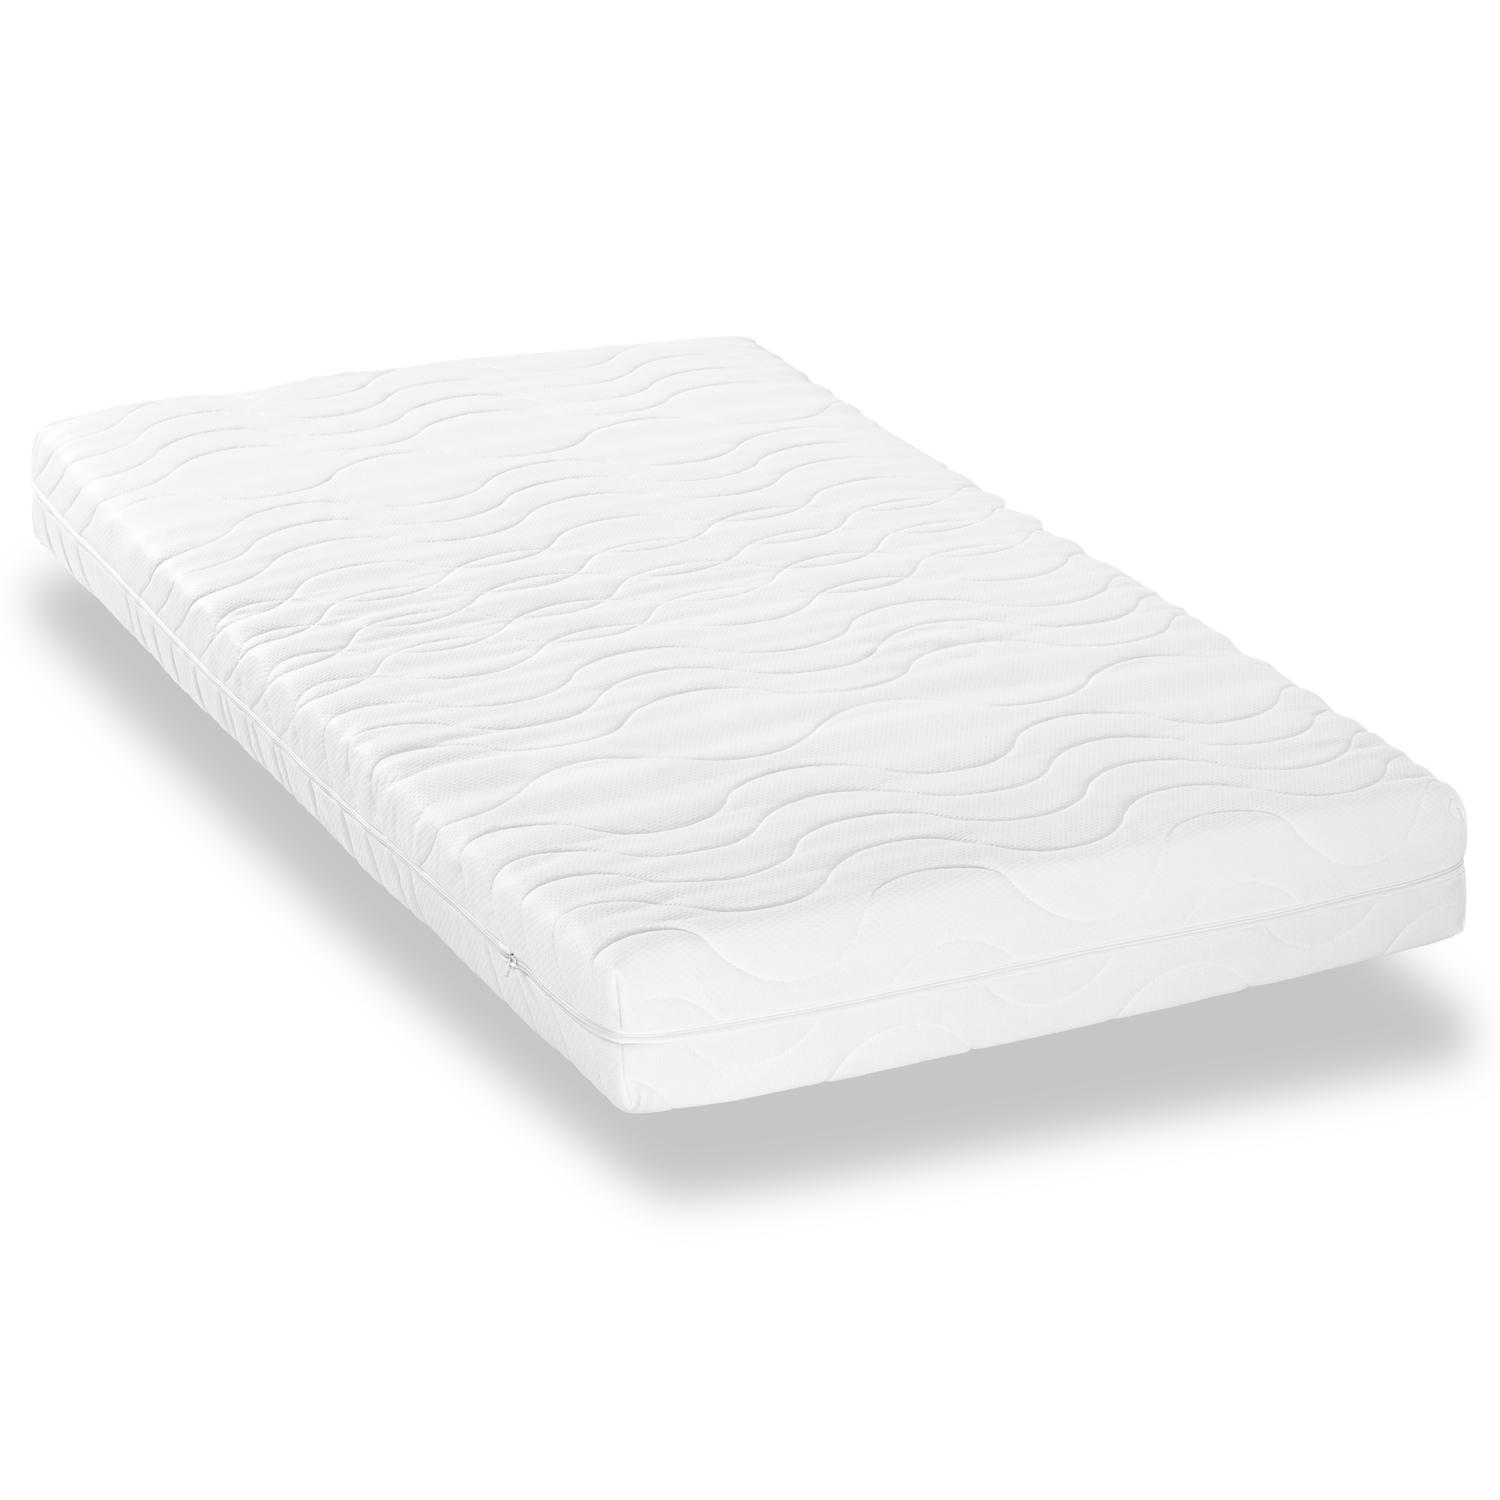 Premium 7-zone mattress 120x200 cm CloudComfort, height 15 cm, firmness level H2/H3